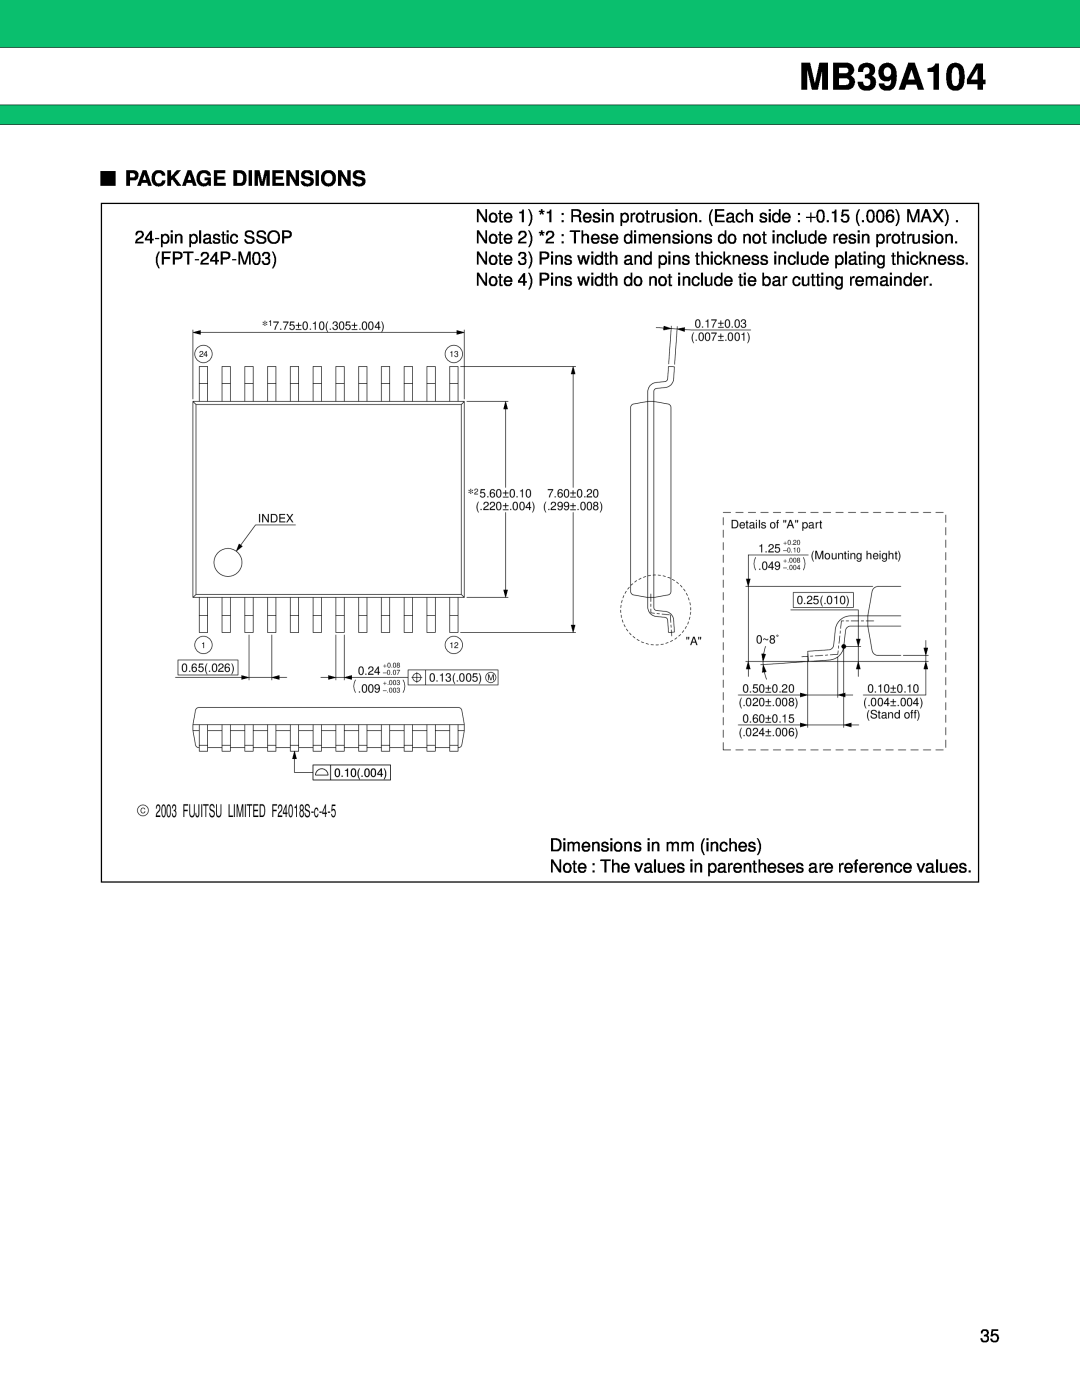 Fujitsu MB39A104 manual Package Dimensions 